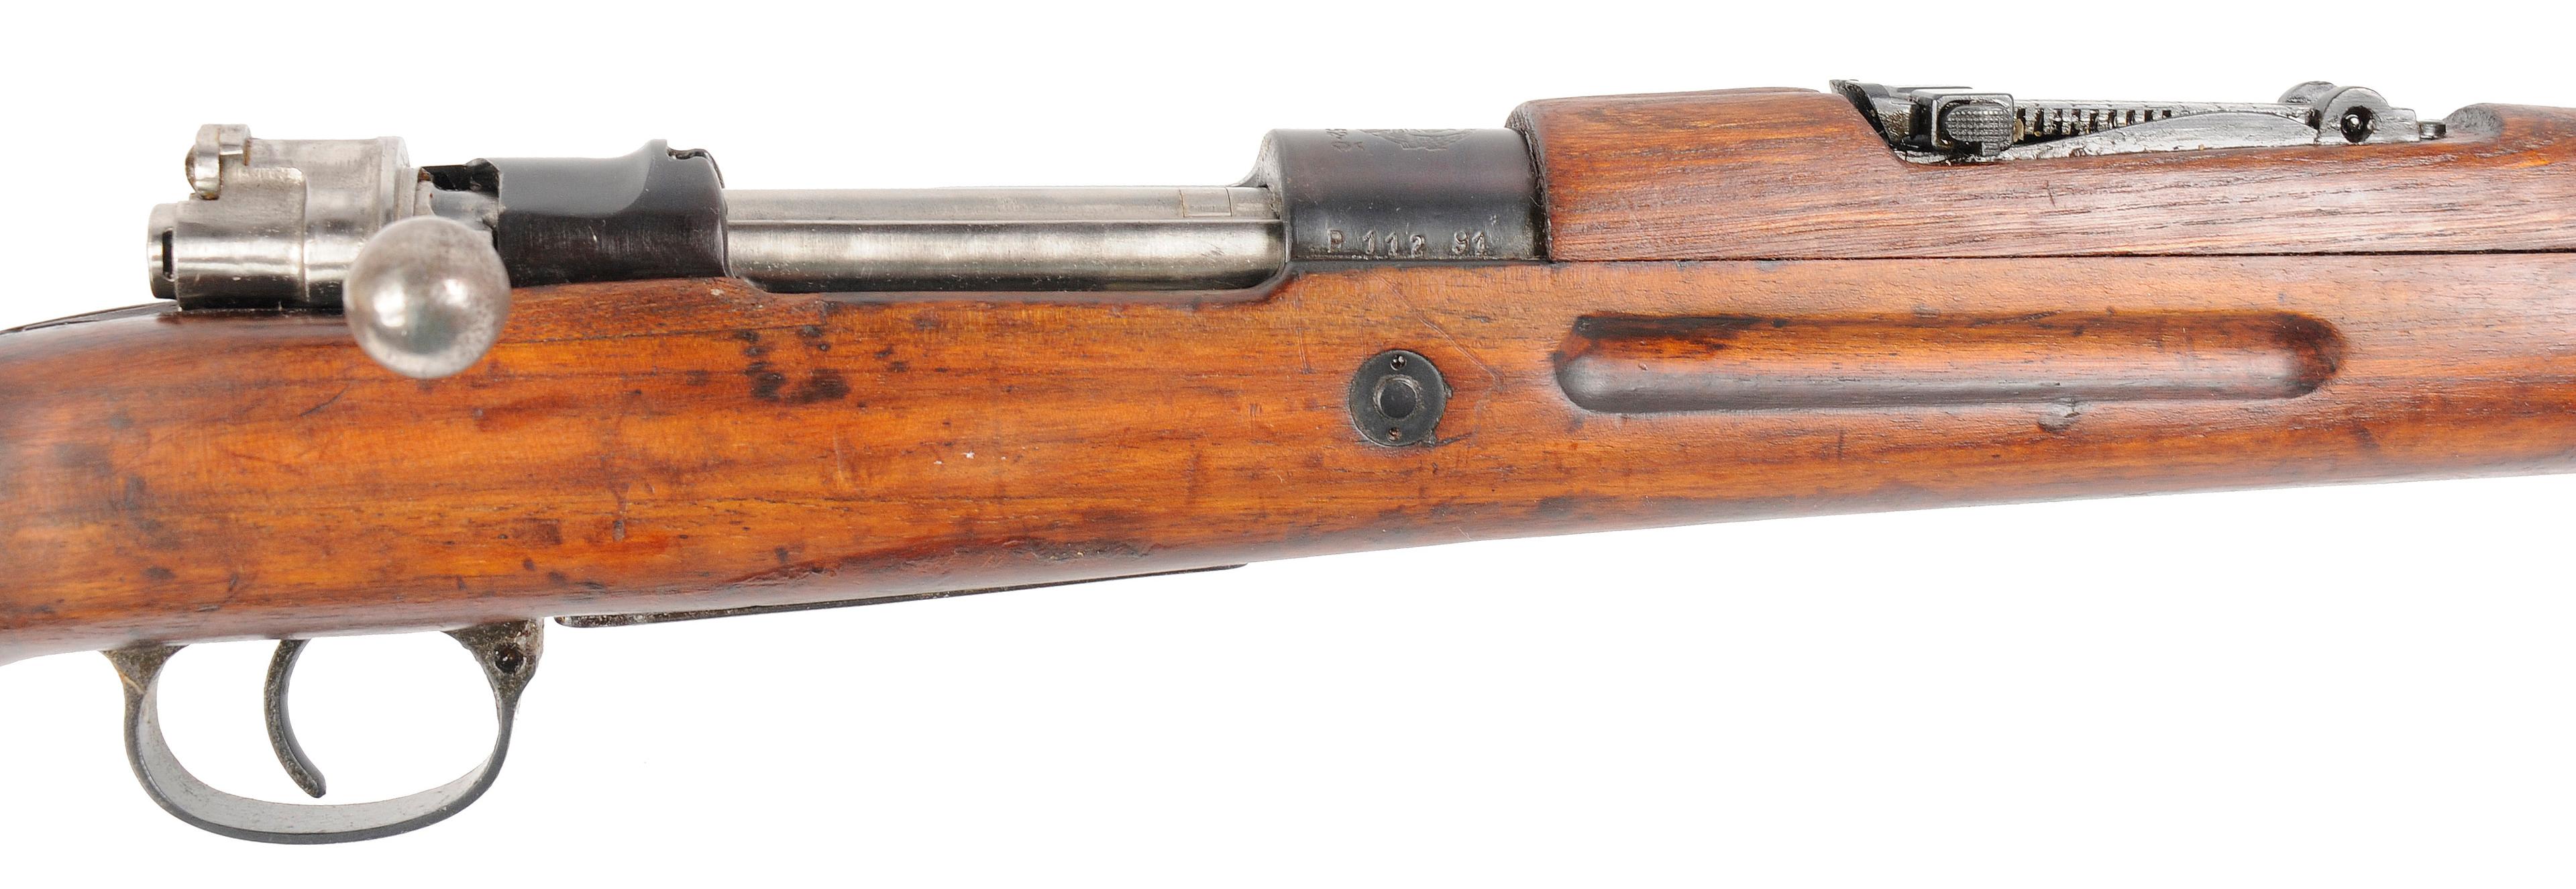 Yugoslavian Military Model 24/52 8mm Mauser Bolt-Action Rifle - FFL # P11291 (RMD 1)